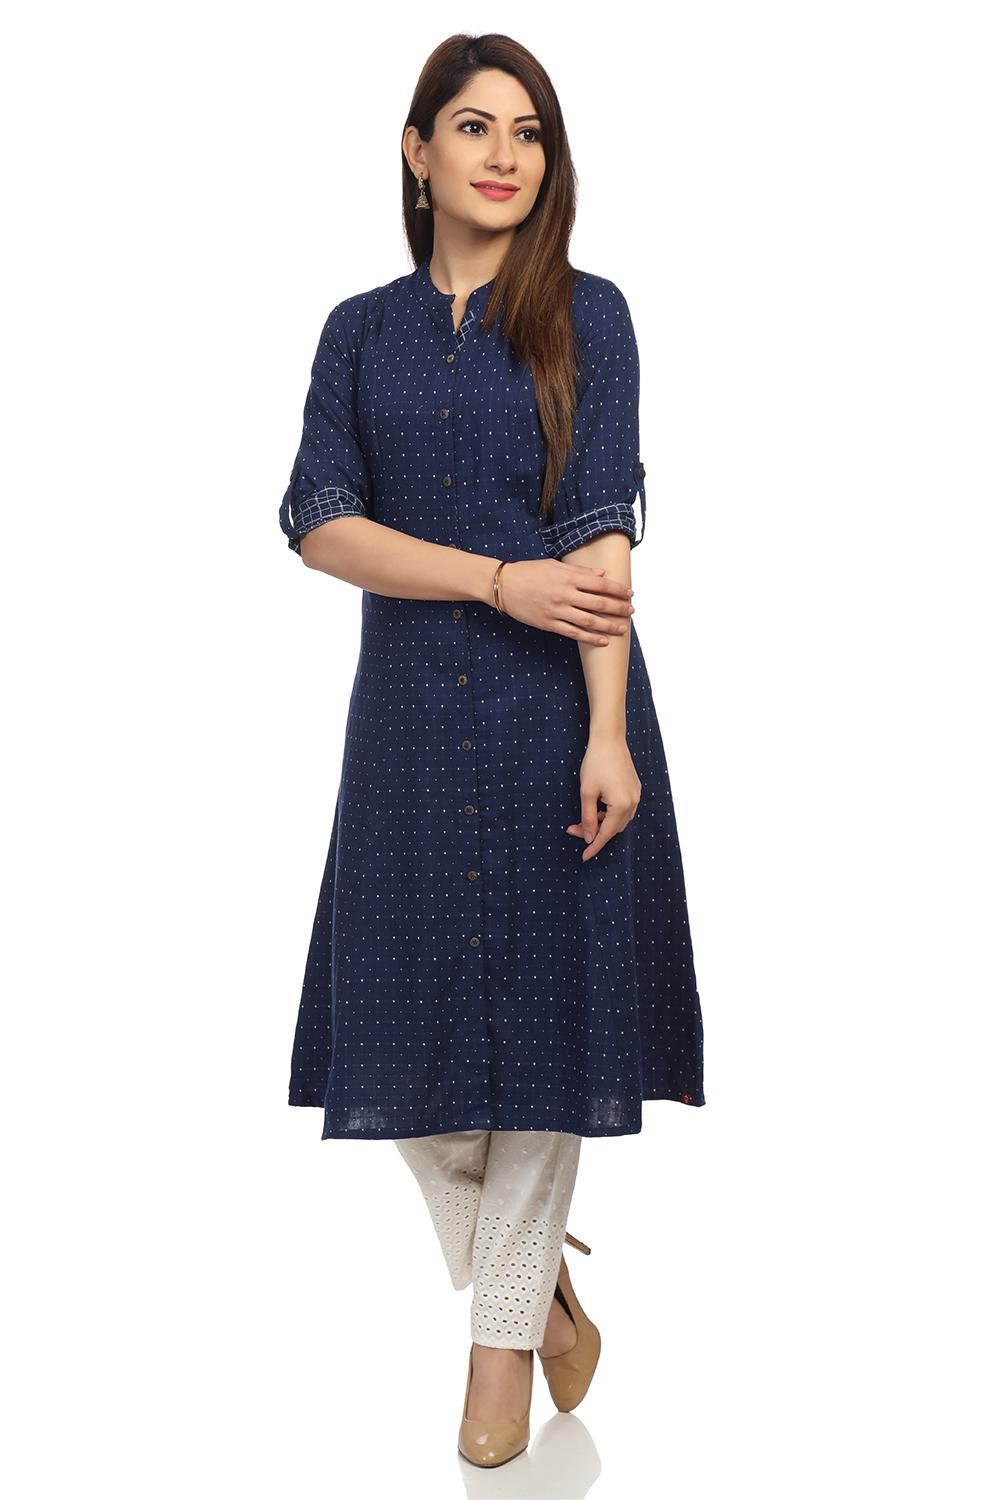 Buy Online Navy Blue Front Open Cotton Suit Set for Women & Girls ...